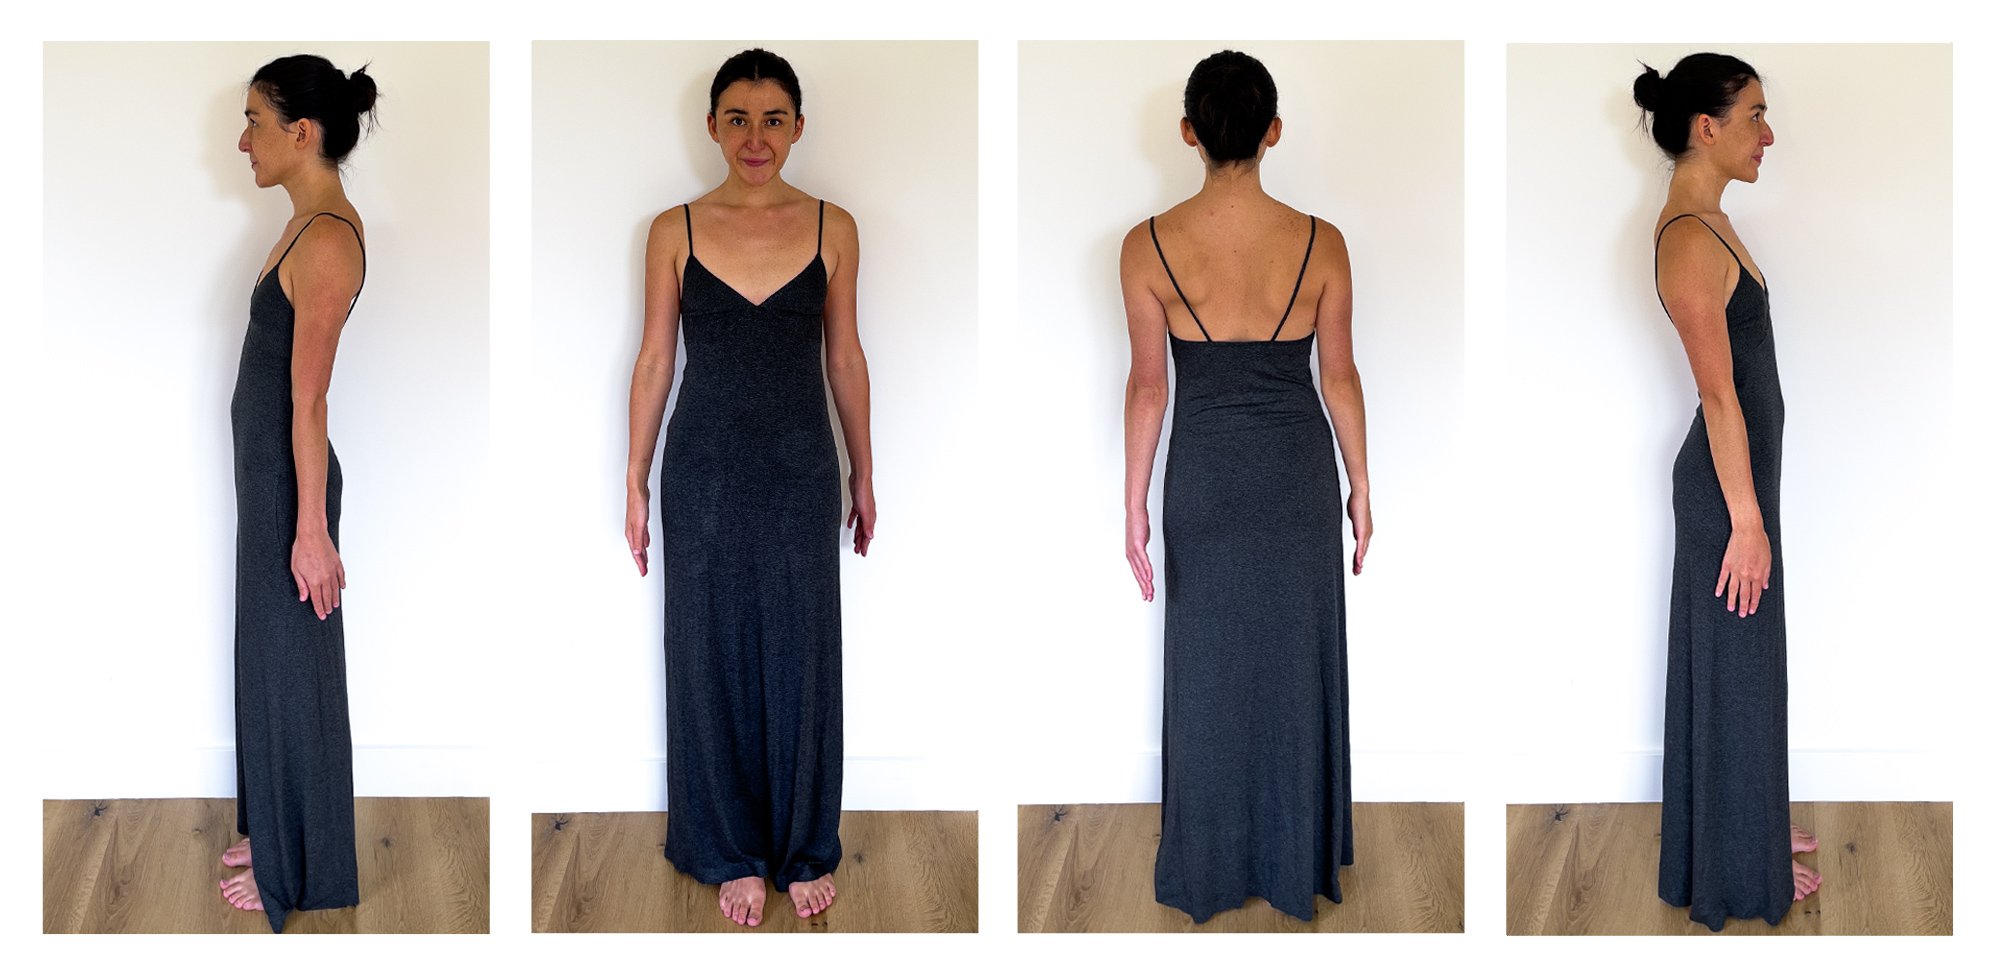 Norma Kamali dress review: This slip dress HAS pockets!